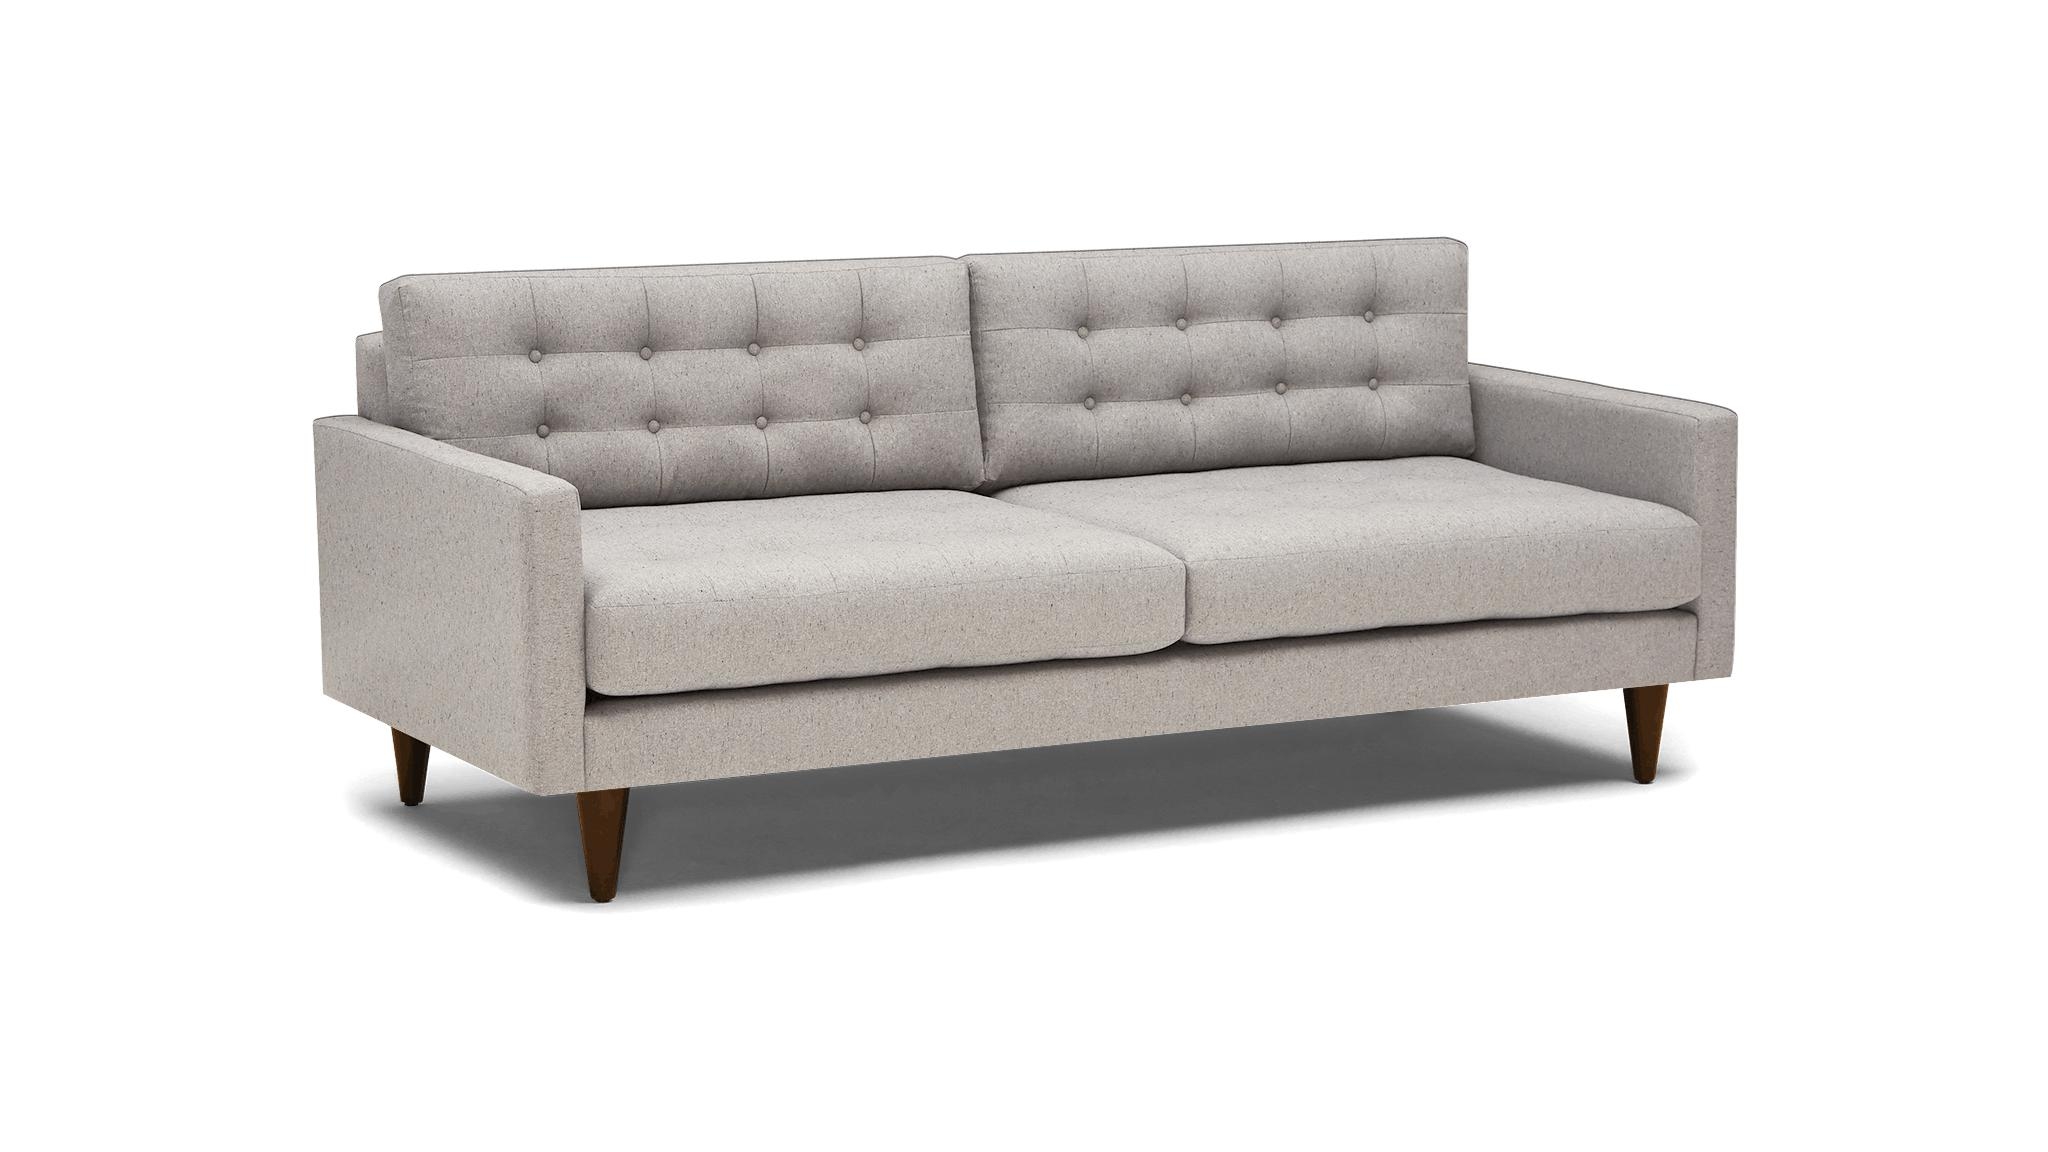 Beige/White Eliot Mid Century Modern Sofa - Merit Dove - Mocha - Image 1